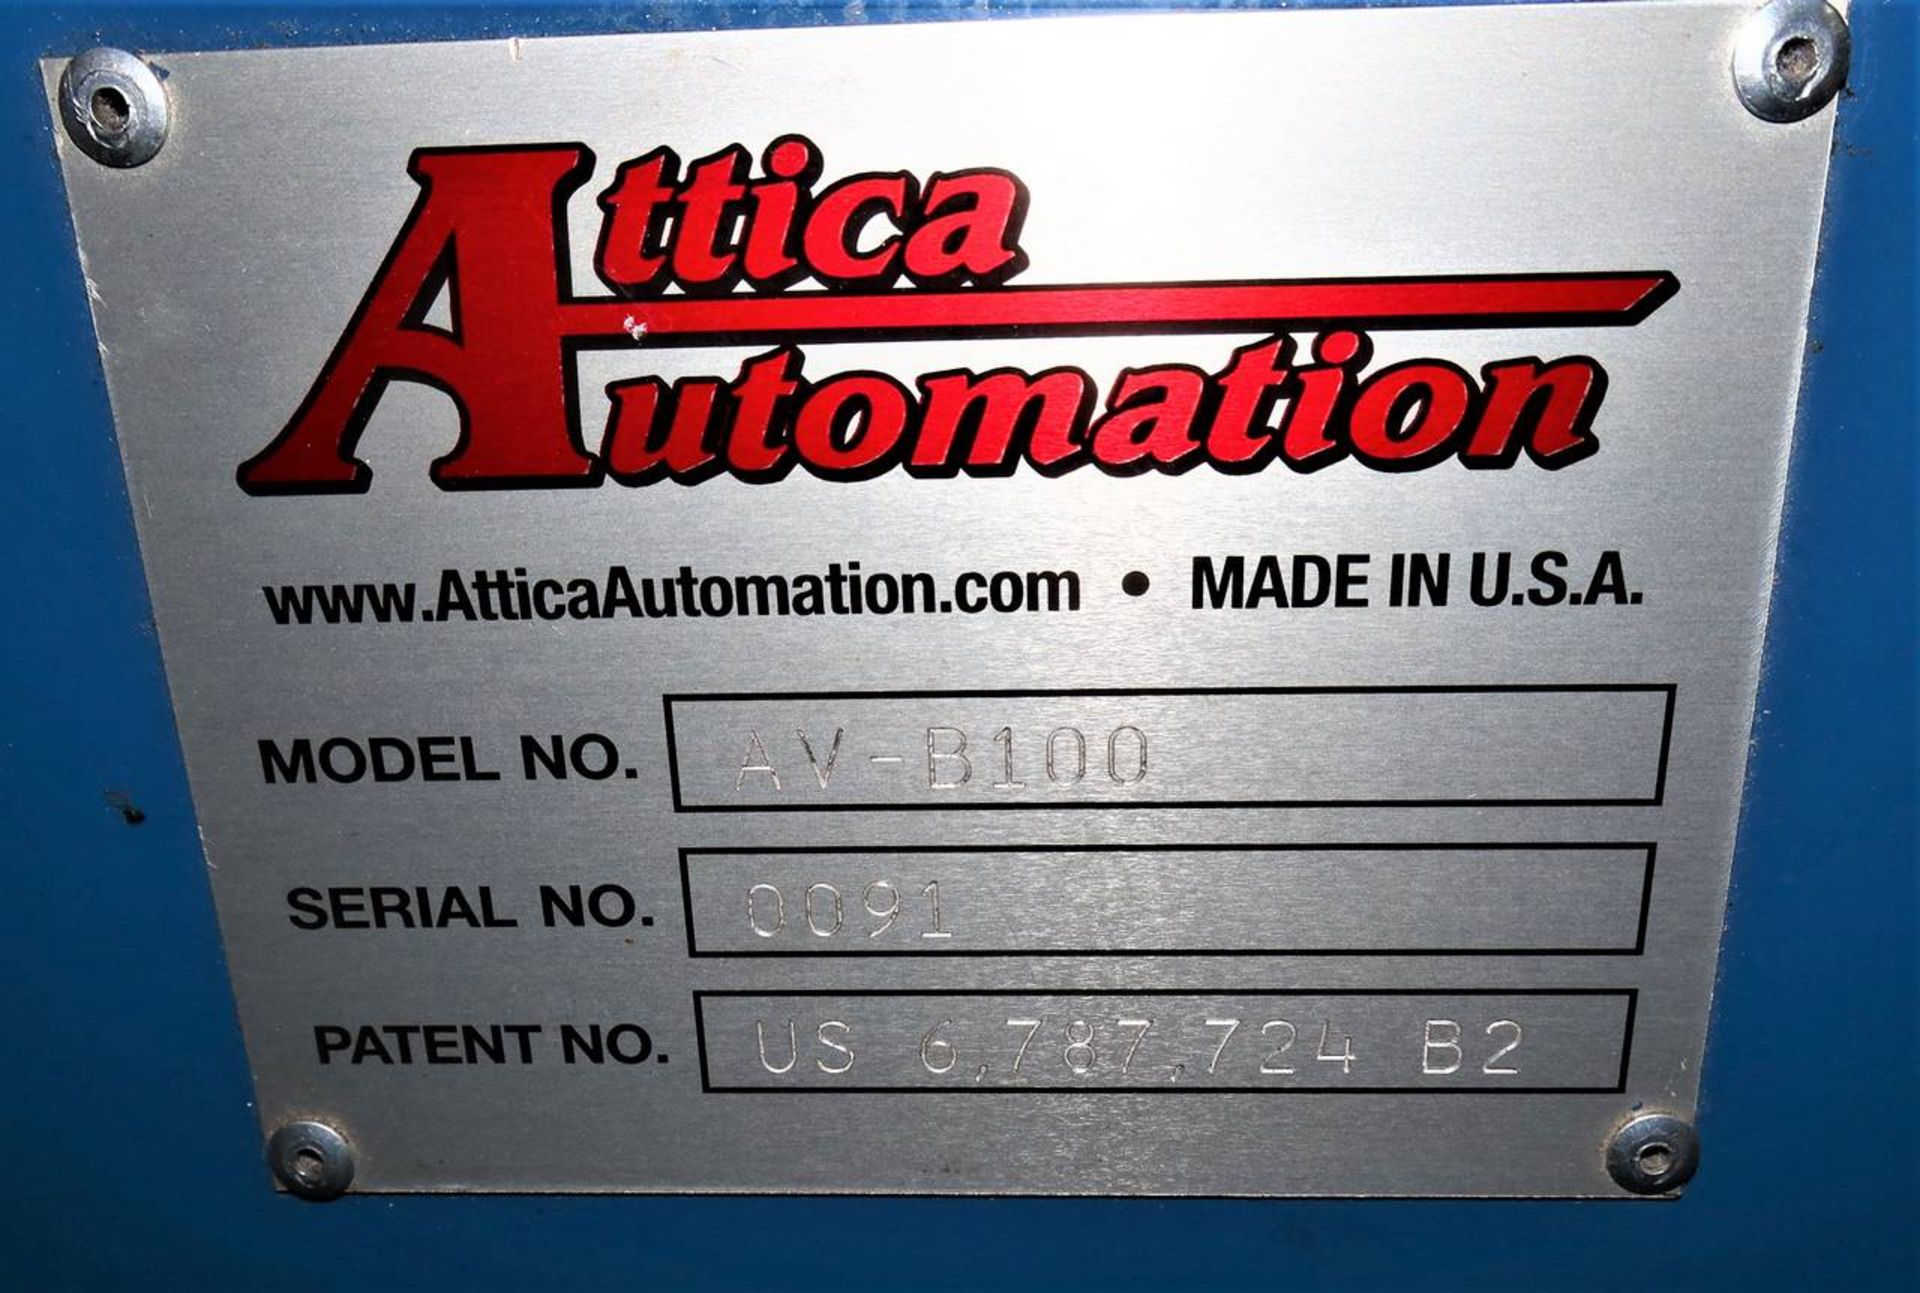 Attica Automation AV-B100 Vision Inspection Machine - Image 7 of 7